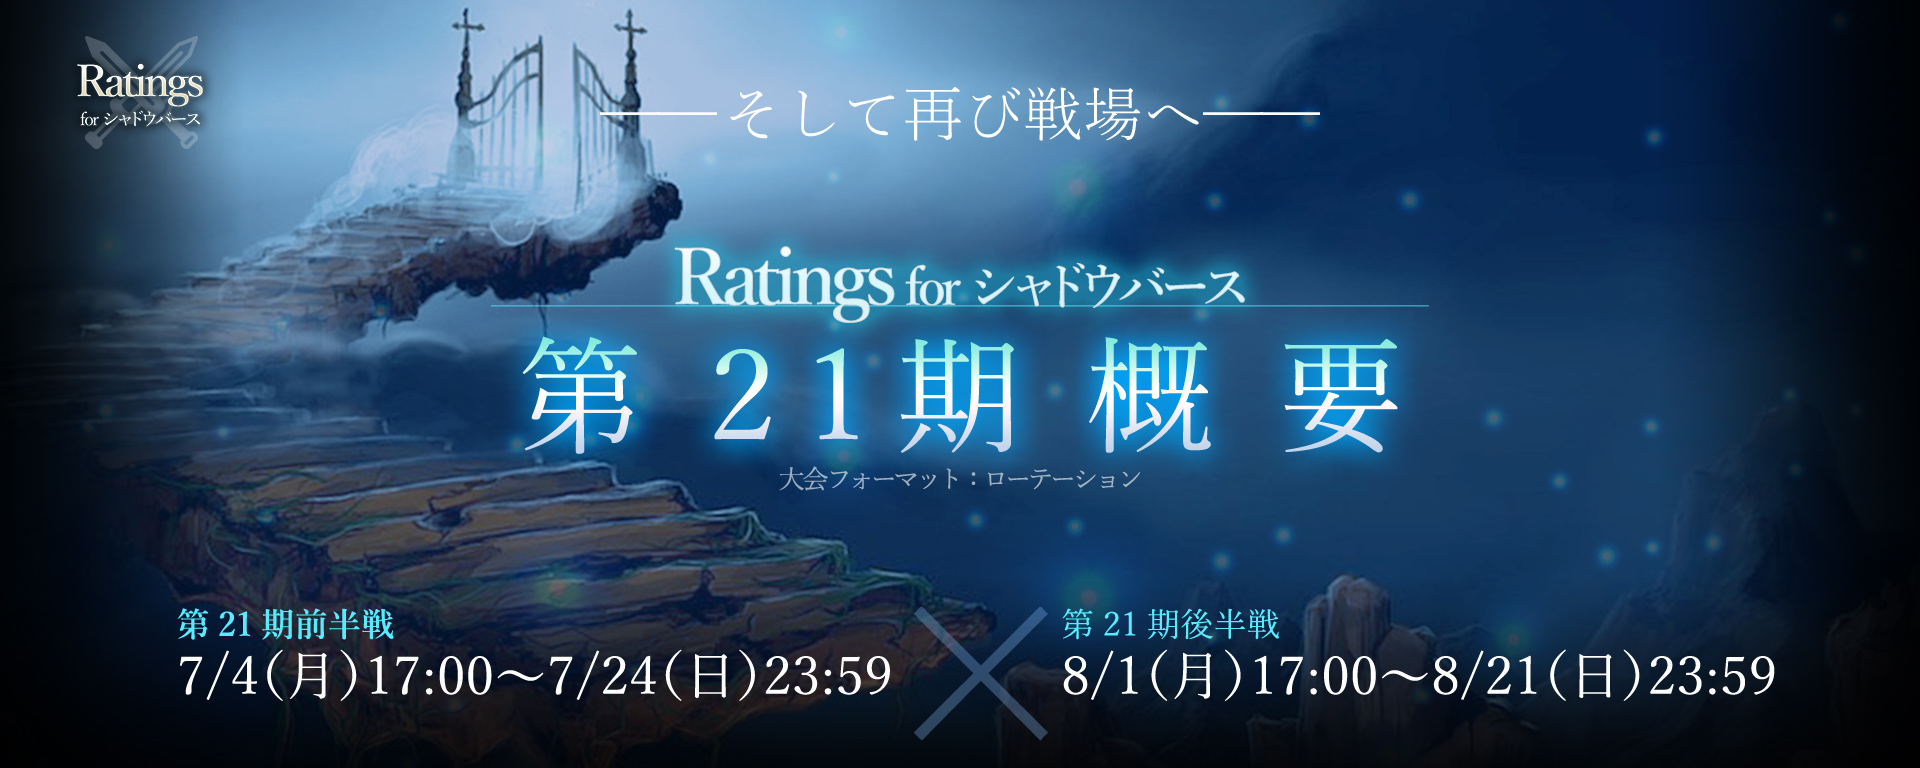 Ratings for シャドウ バース